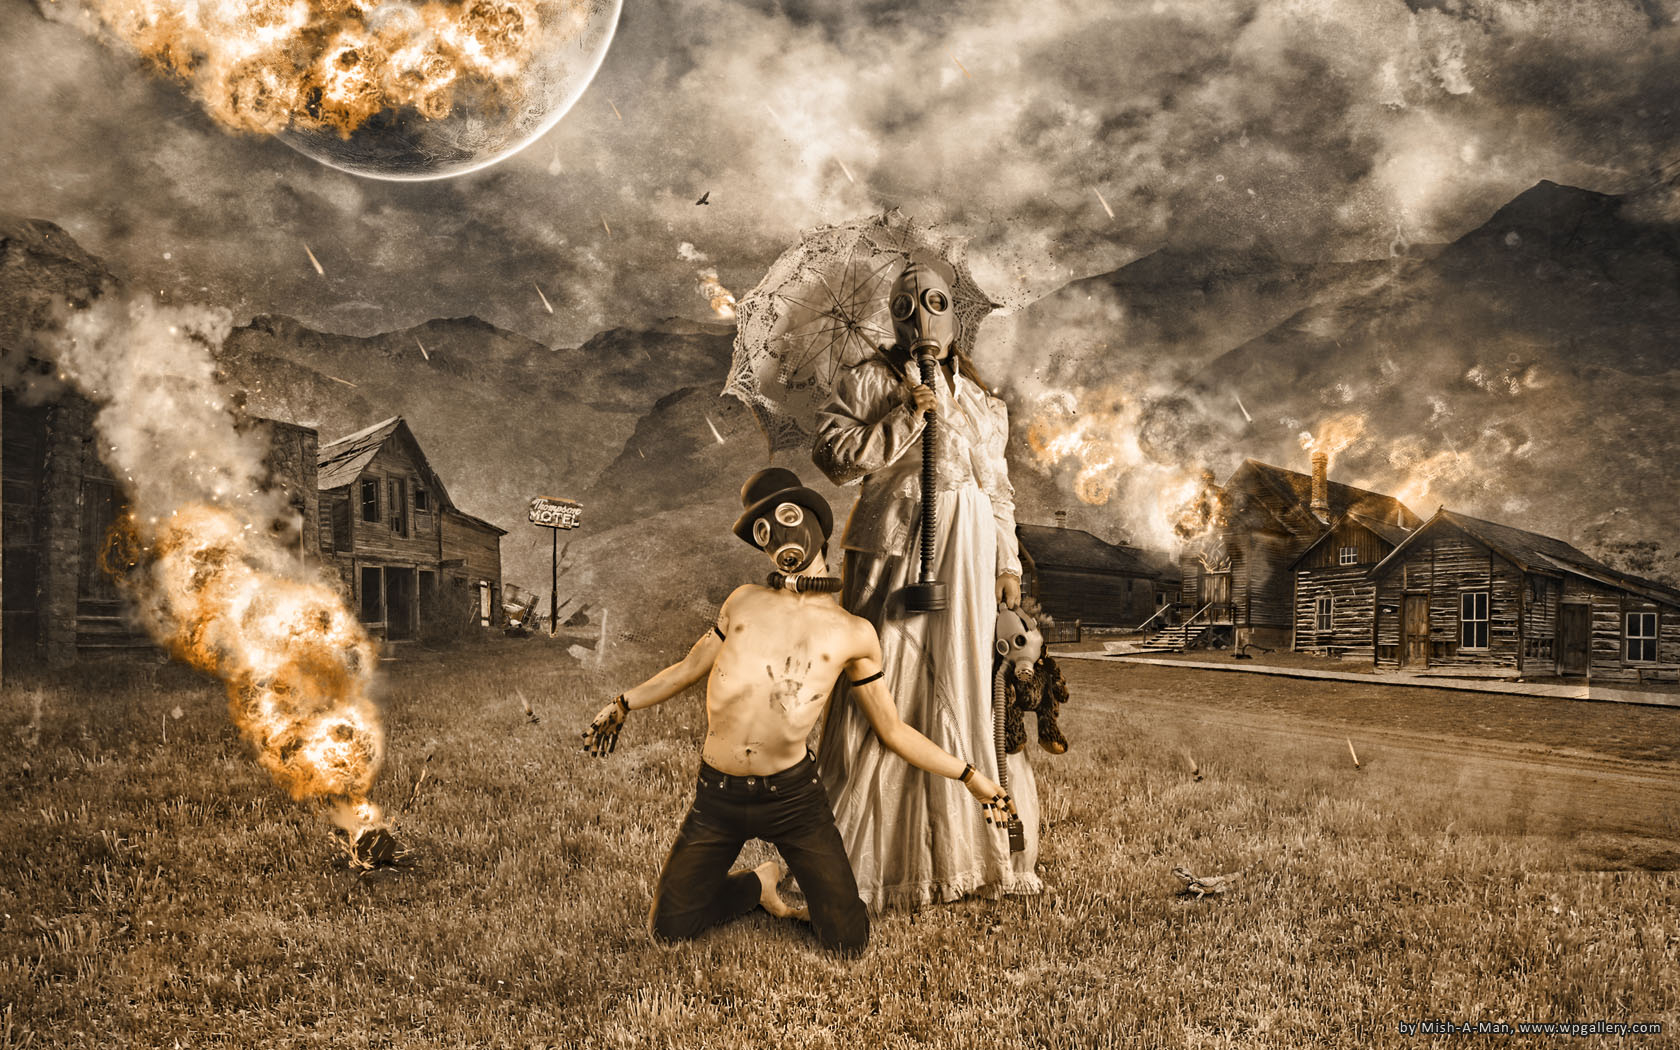 Apocalypse - Family Portrait by Mish-A-Man